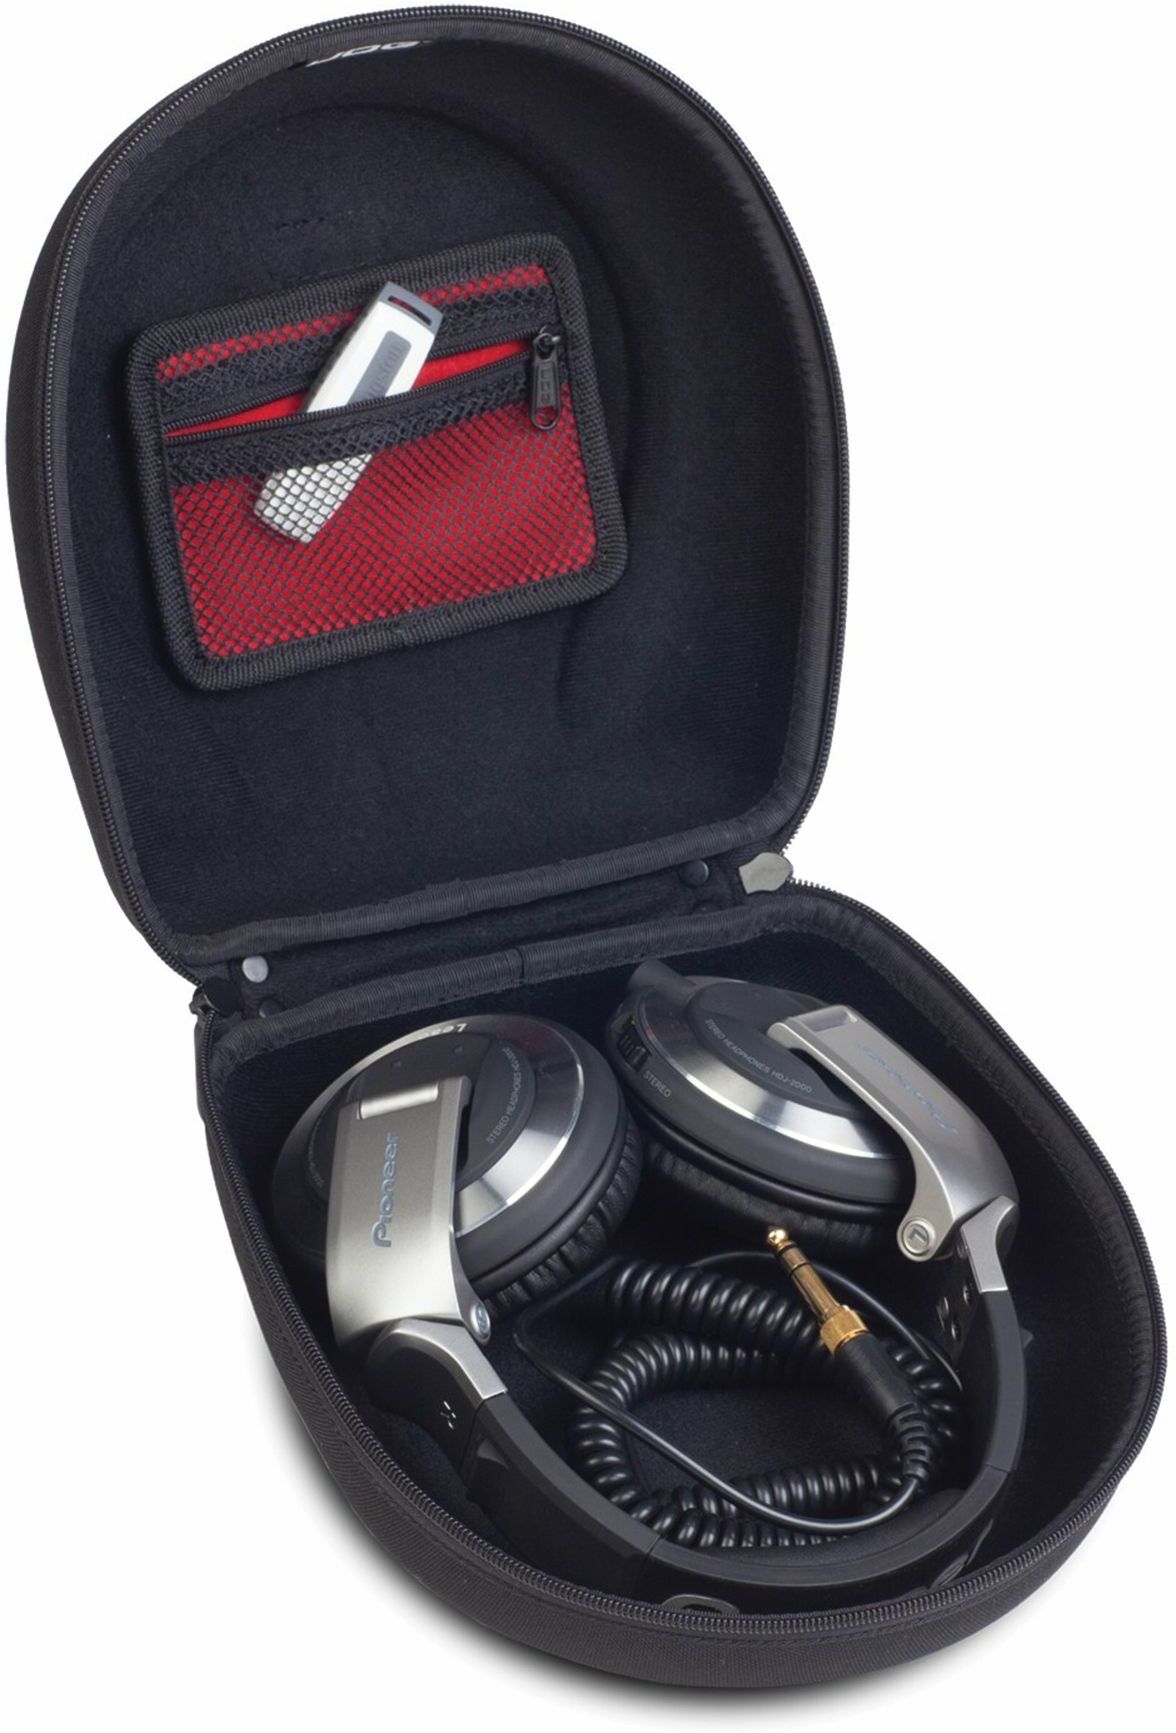 Udg U 8202 Bl - Case & bag for headphone - Main picture